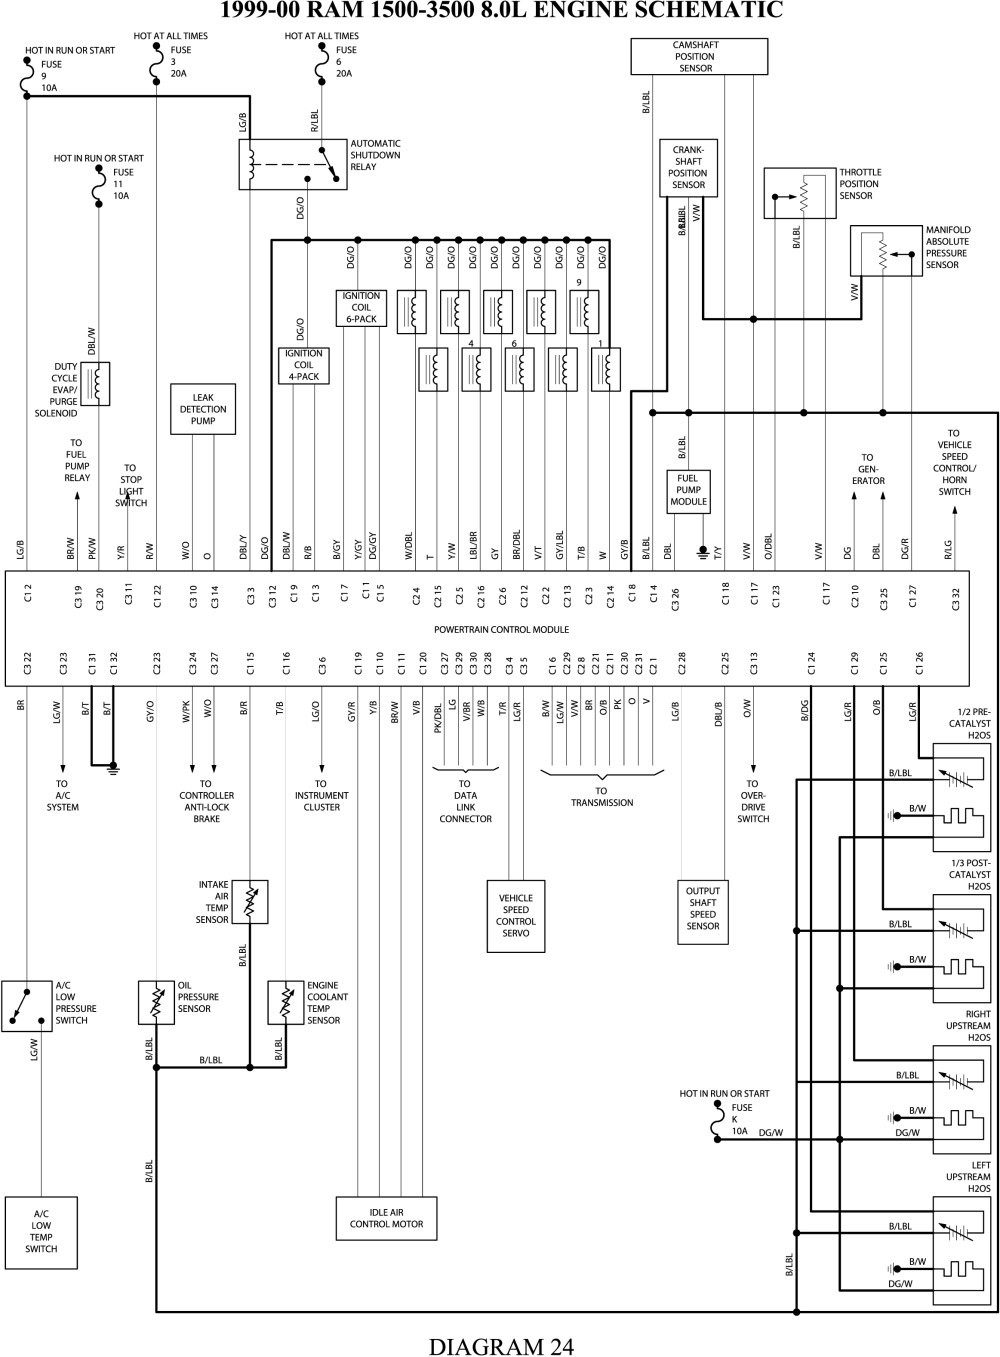 98 dodge ram wiring diagram deconstructmyhouse org rh deconstructmyhouse org 98 dodge ram 2500 radio wiring